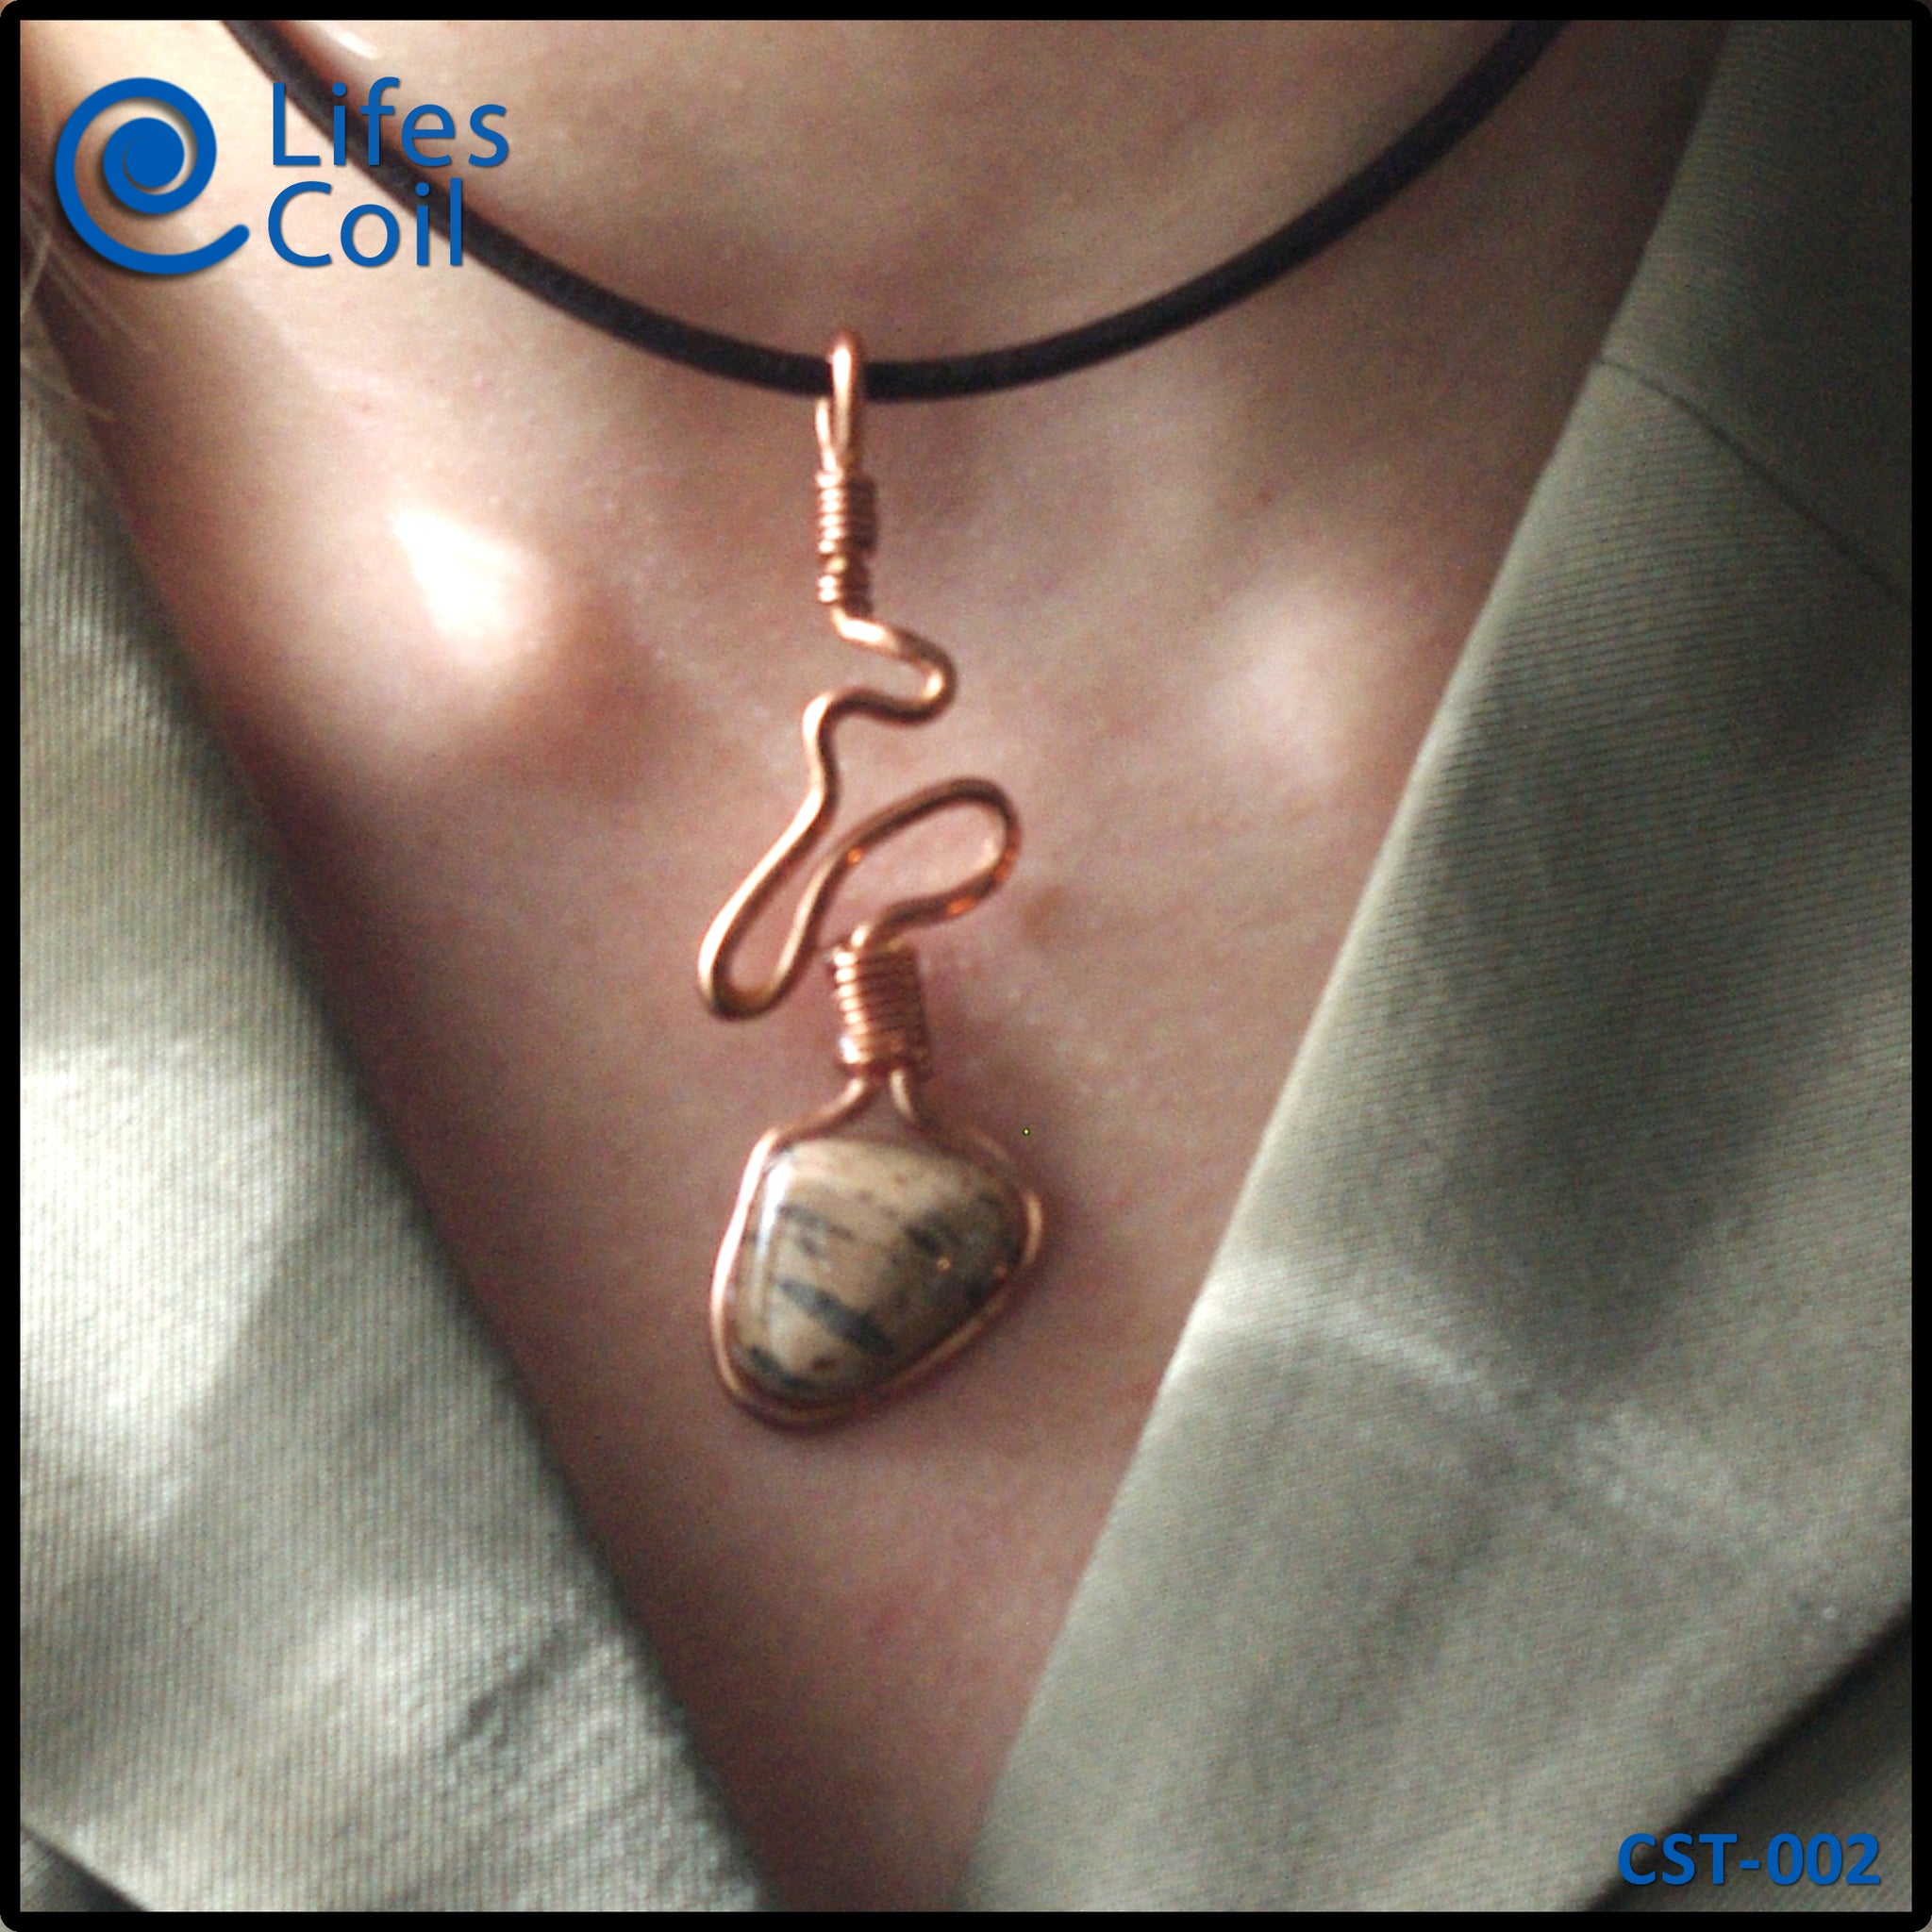 Copper Coil Necklace